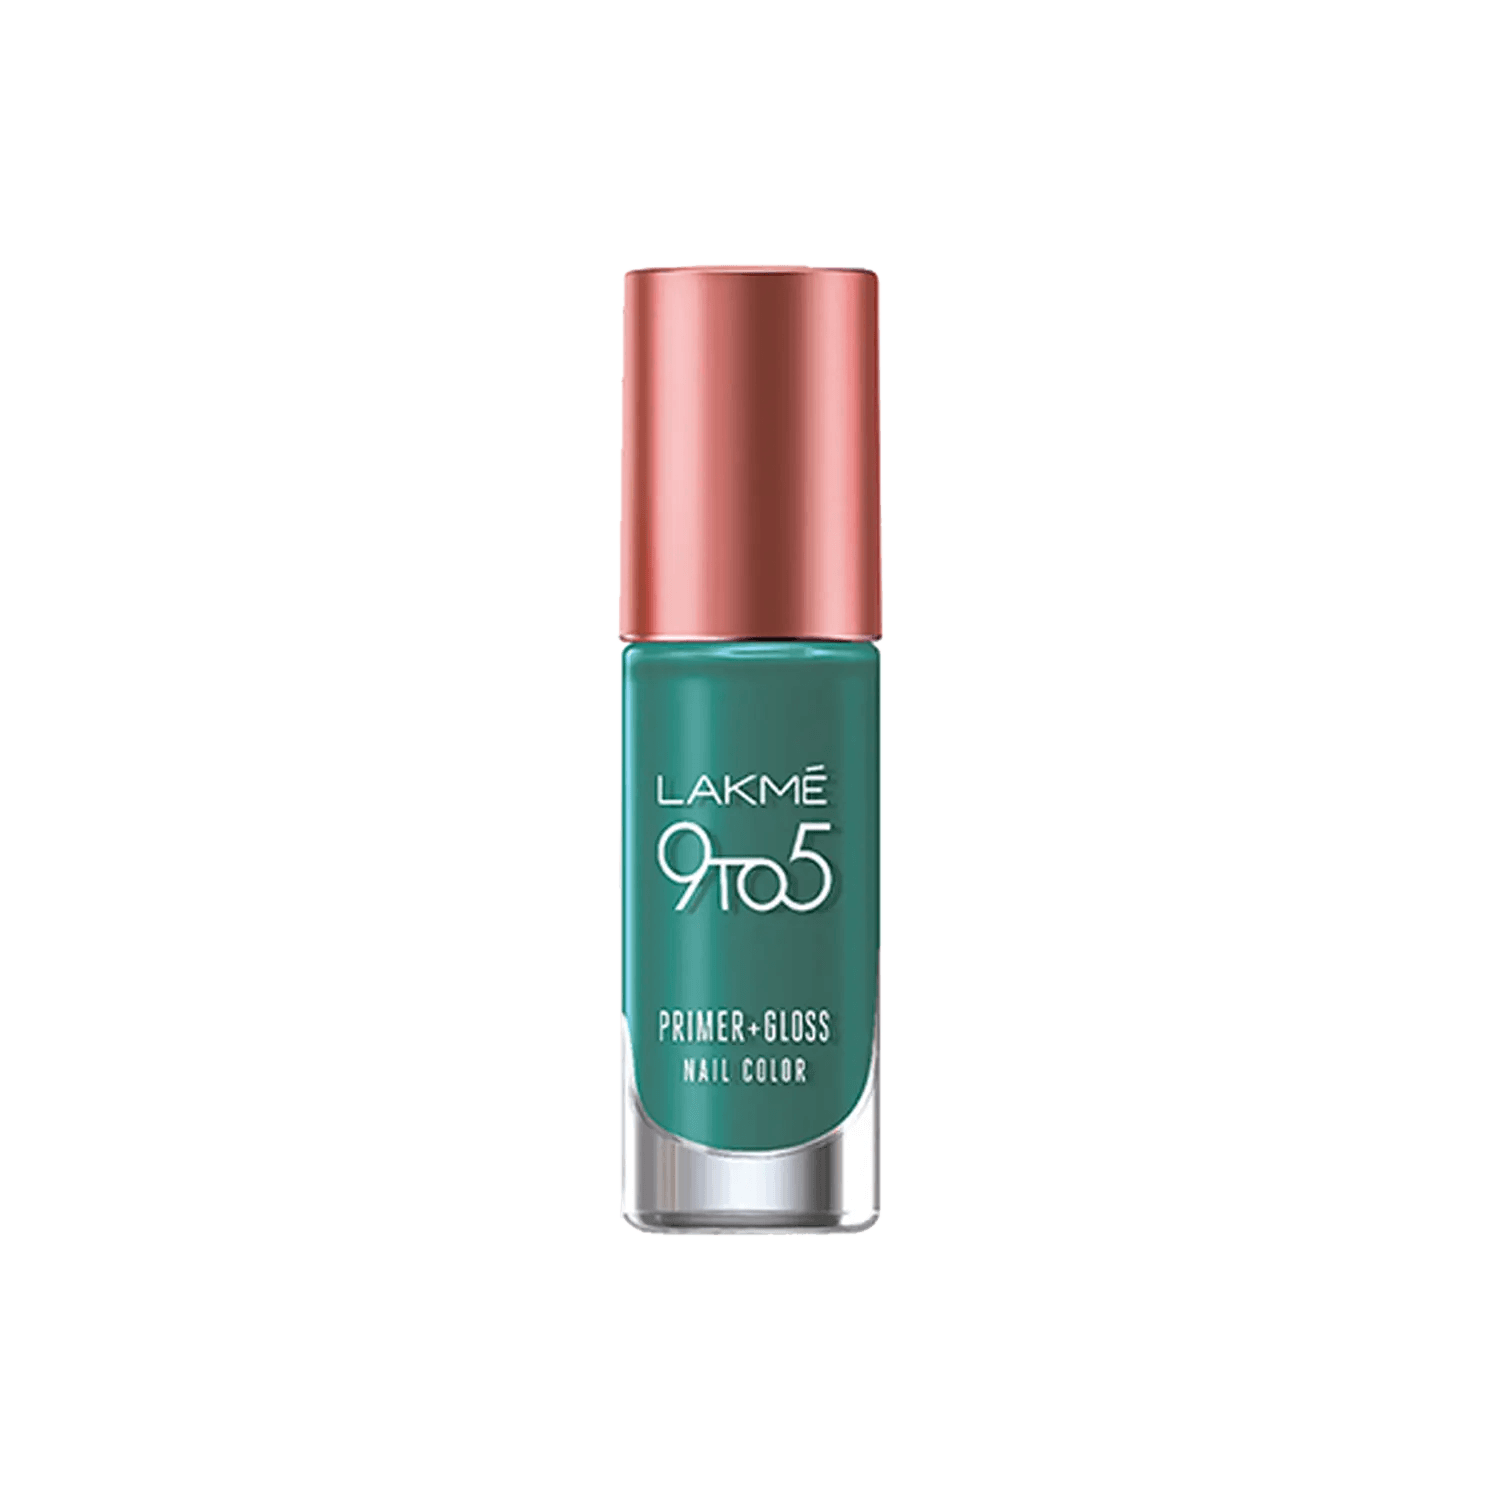 Lakme | Lakme 9To5 Primer + Gloss Nail Color - Teal Deal (6ml)